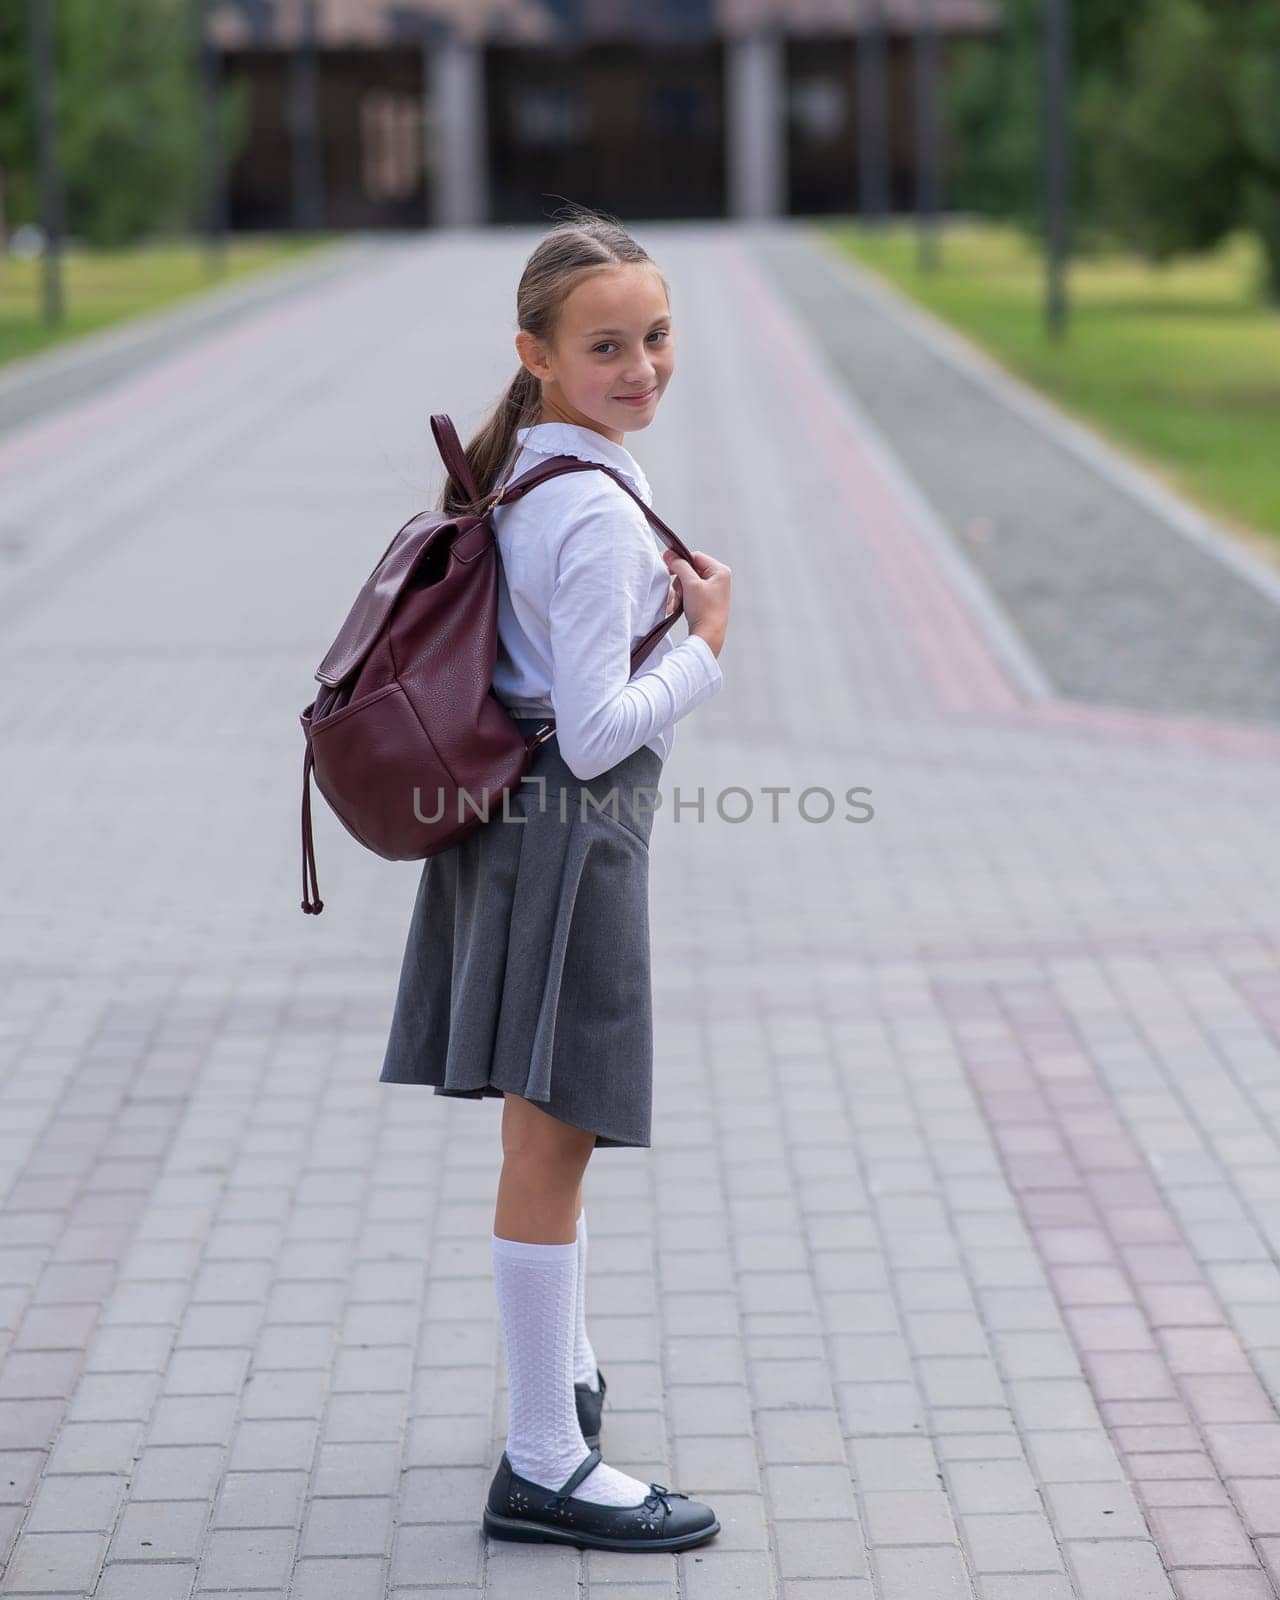 Portrait of caucasian schoolgirl in uniform and with backpack outdoors